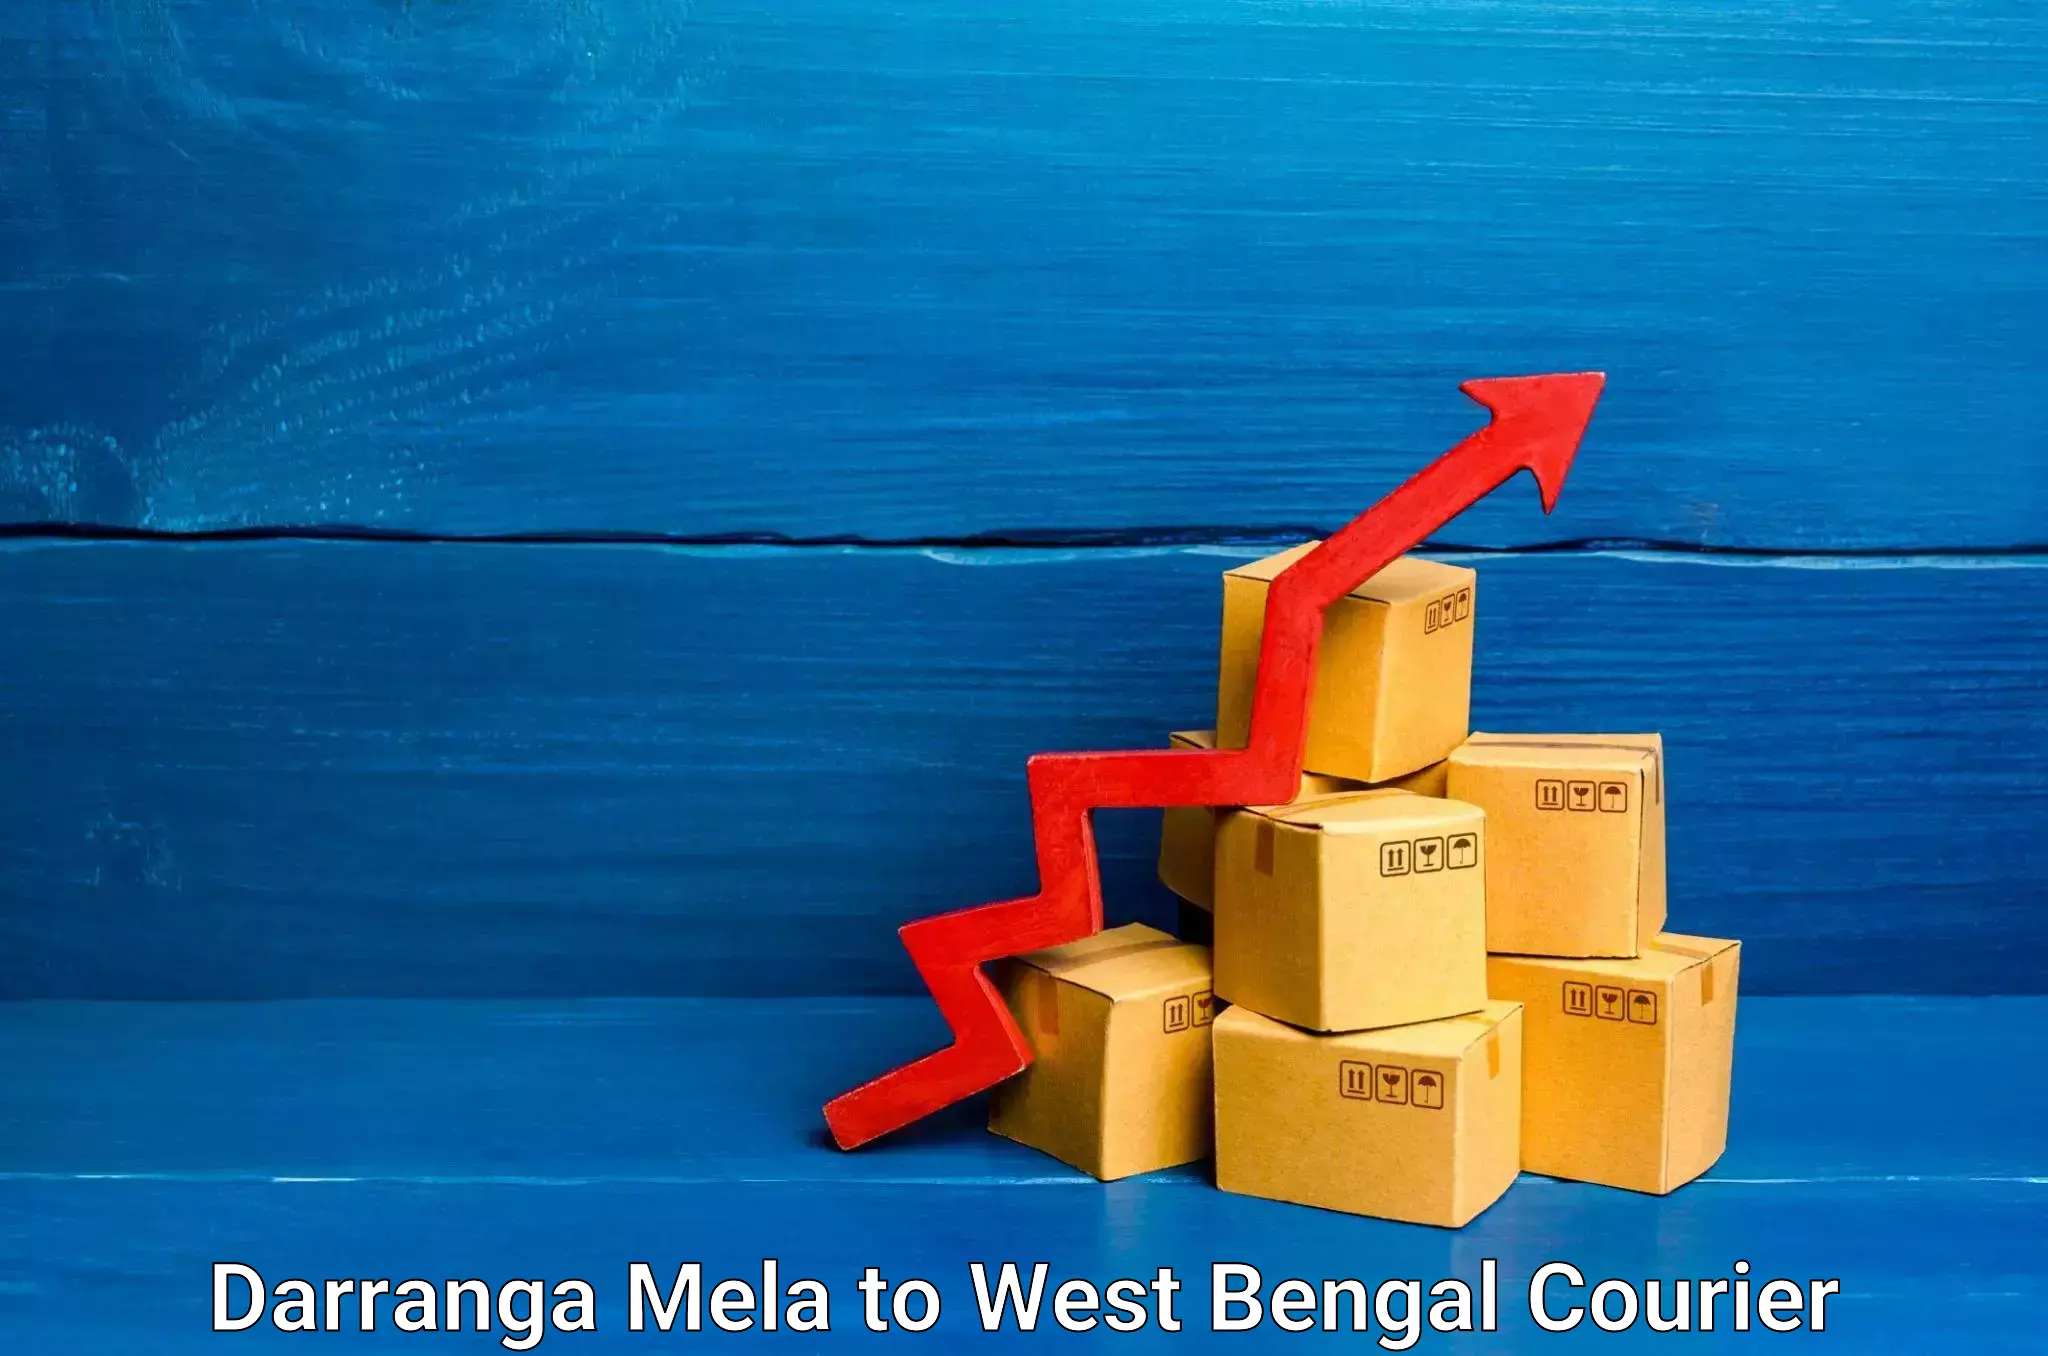 Tracking updates in Darranga Mela to Bandel